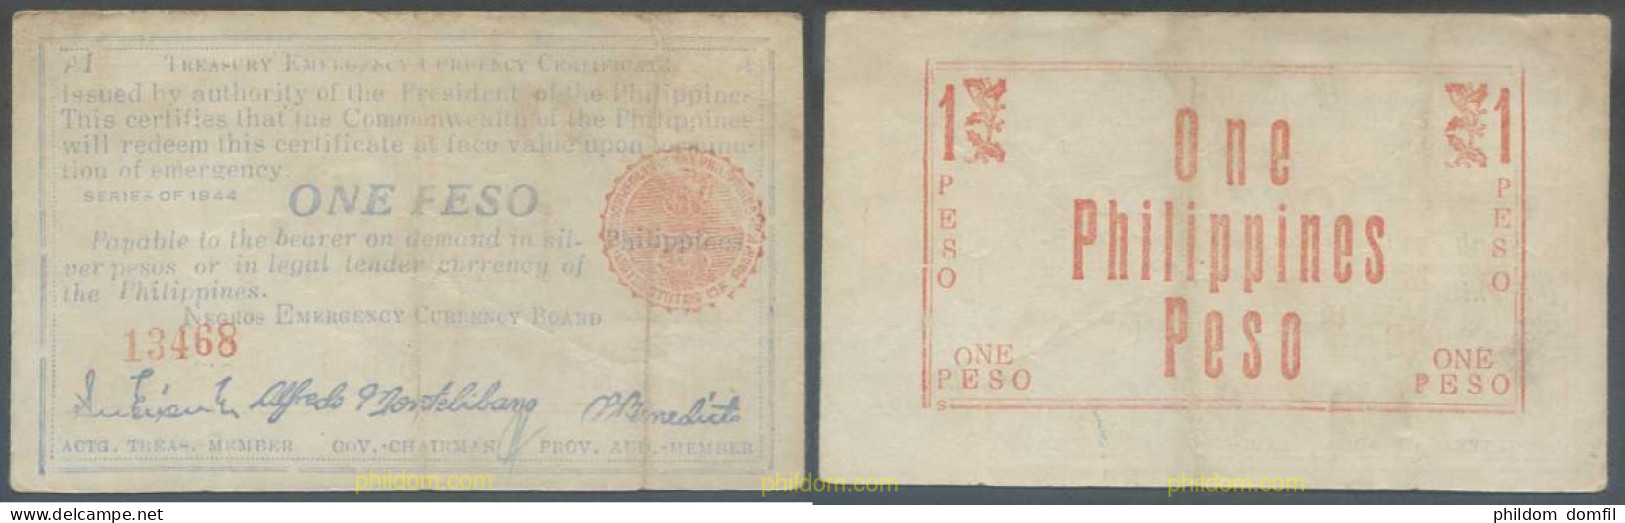 5894 FILIPINAS 1944 PHILIPPINES 1 PESO 1944 - Filipinas